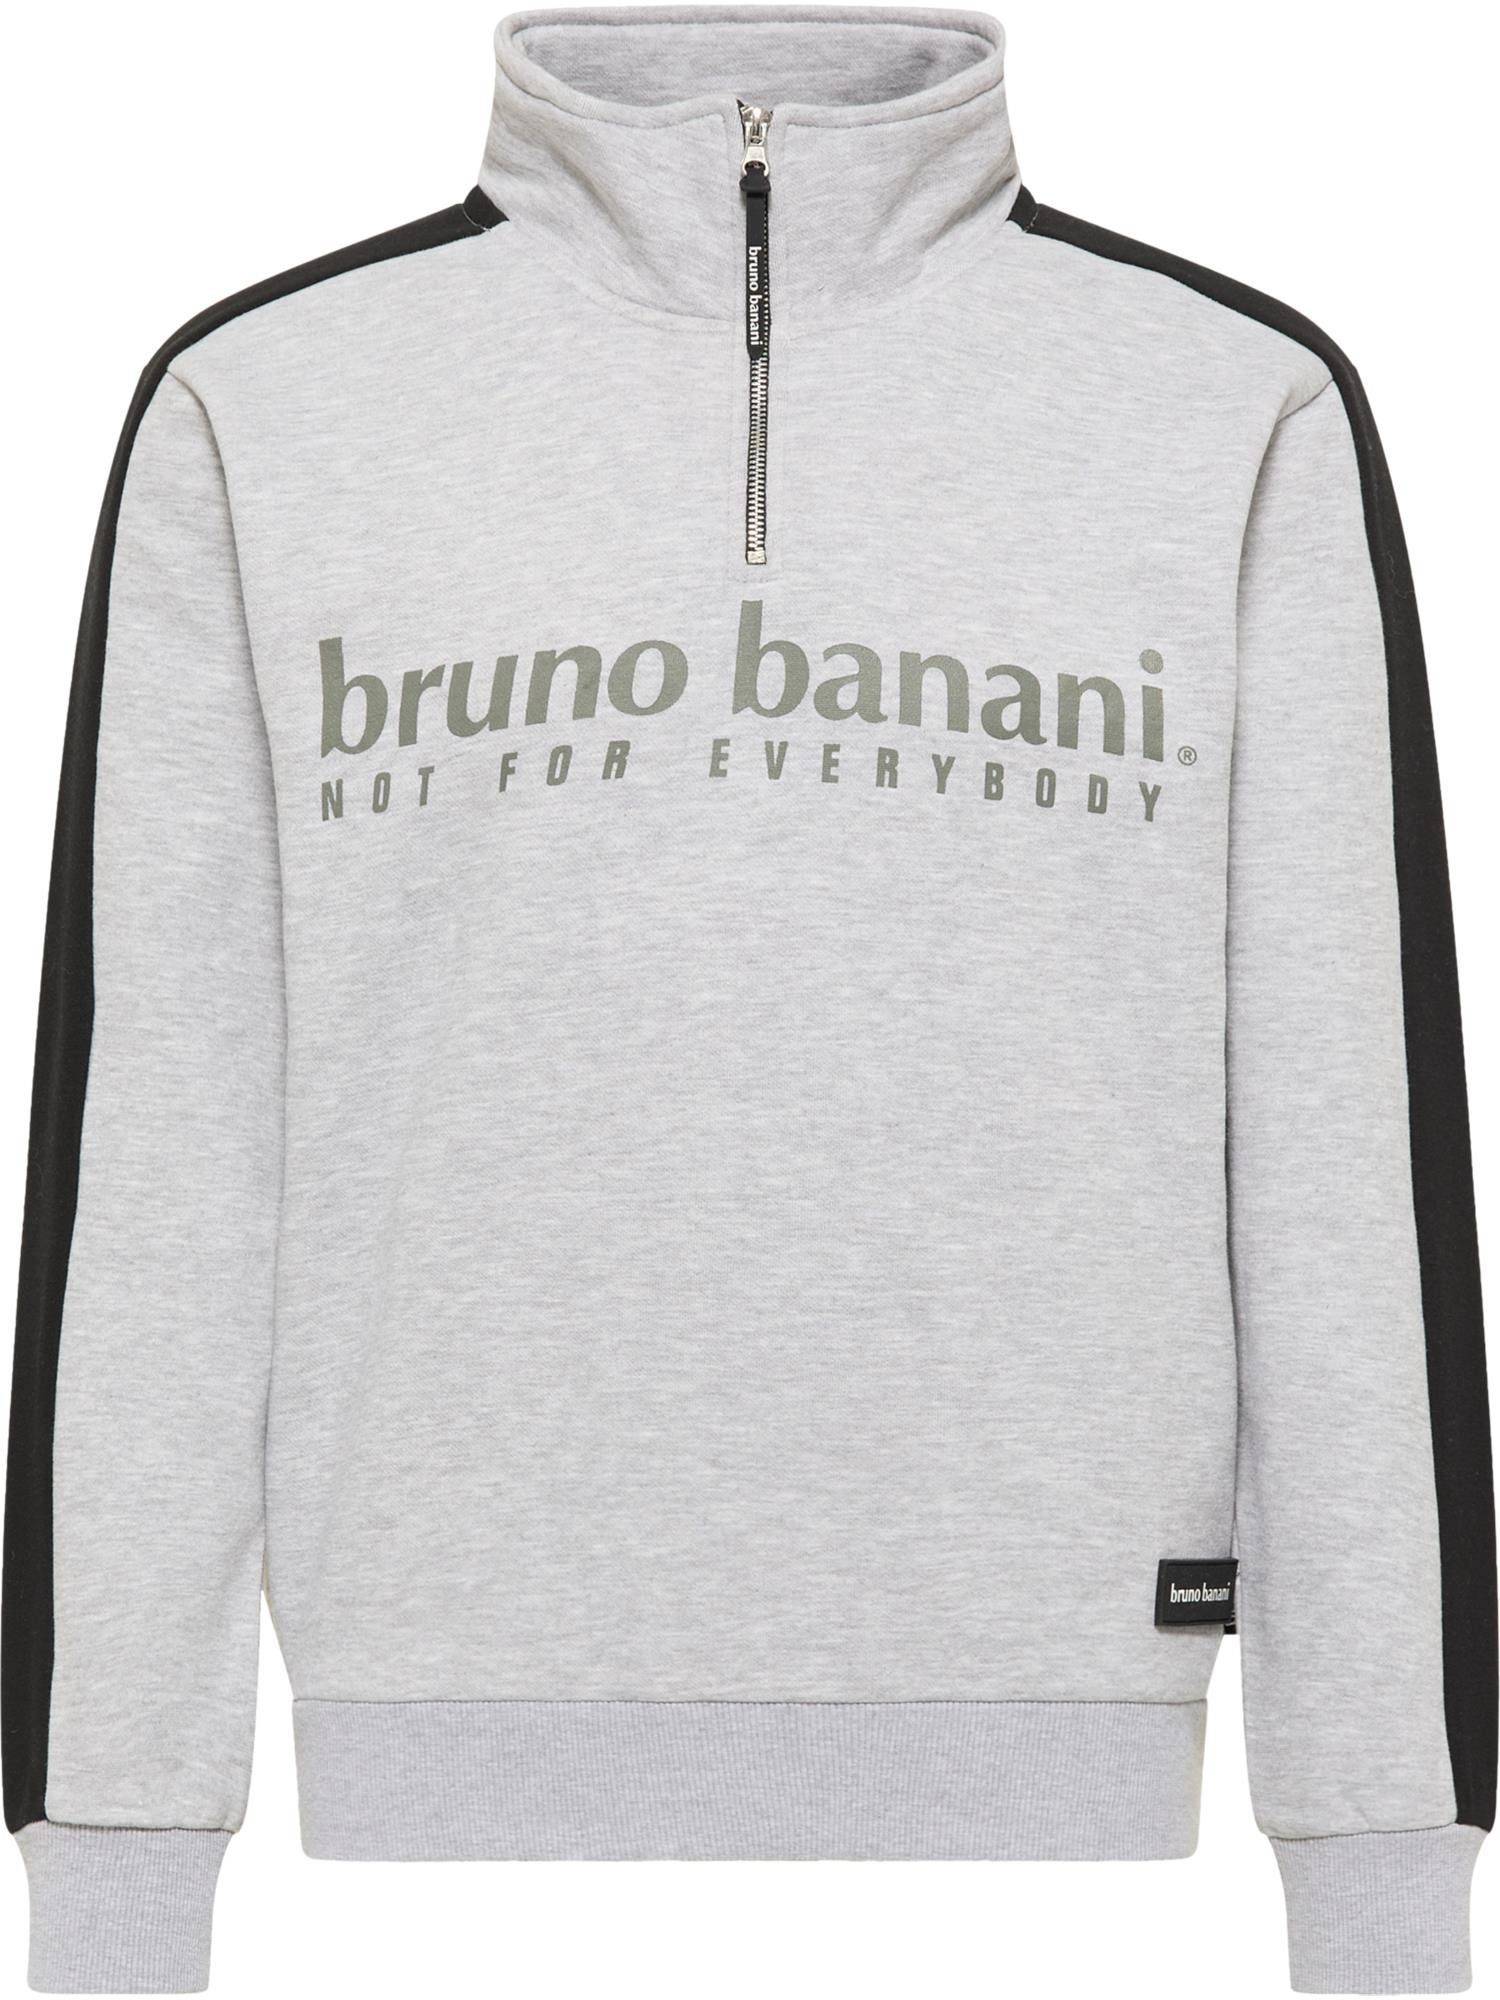 Banani Sweatshirt ANTHONY Bruno